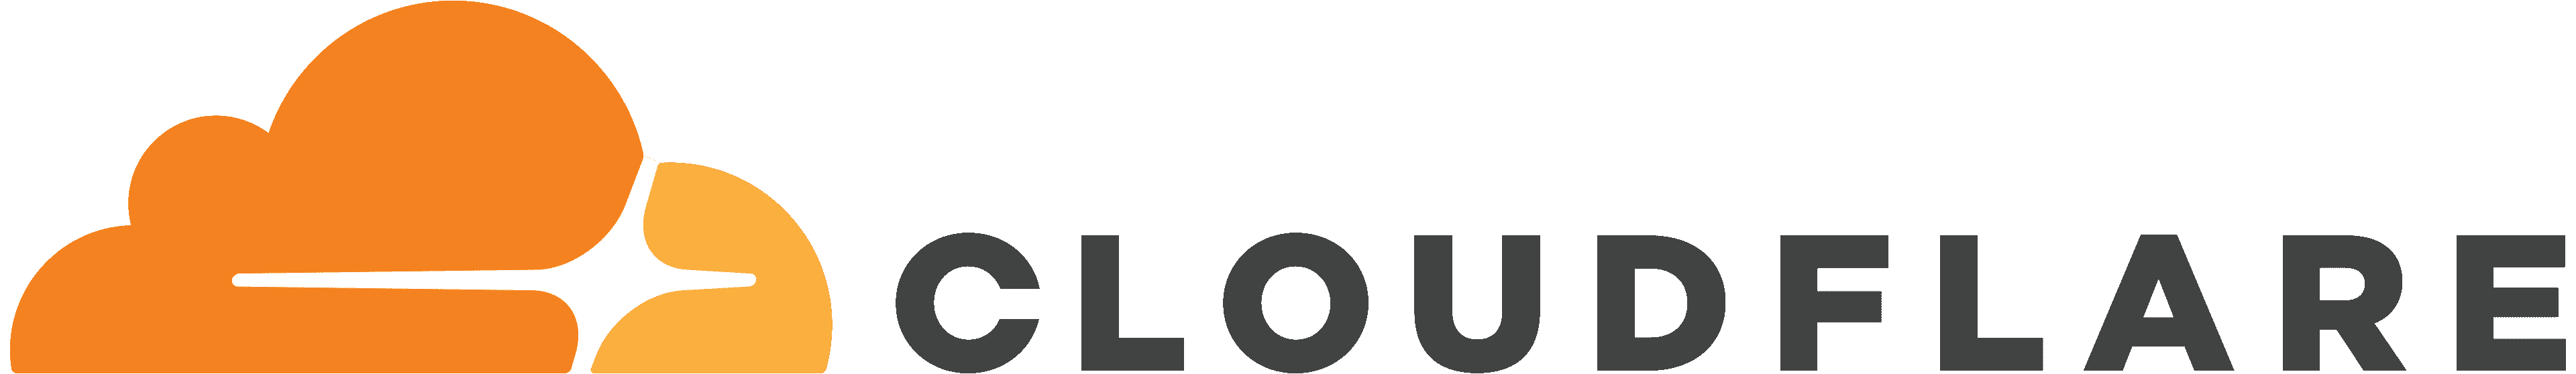 Cloudflare-Logo-Black